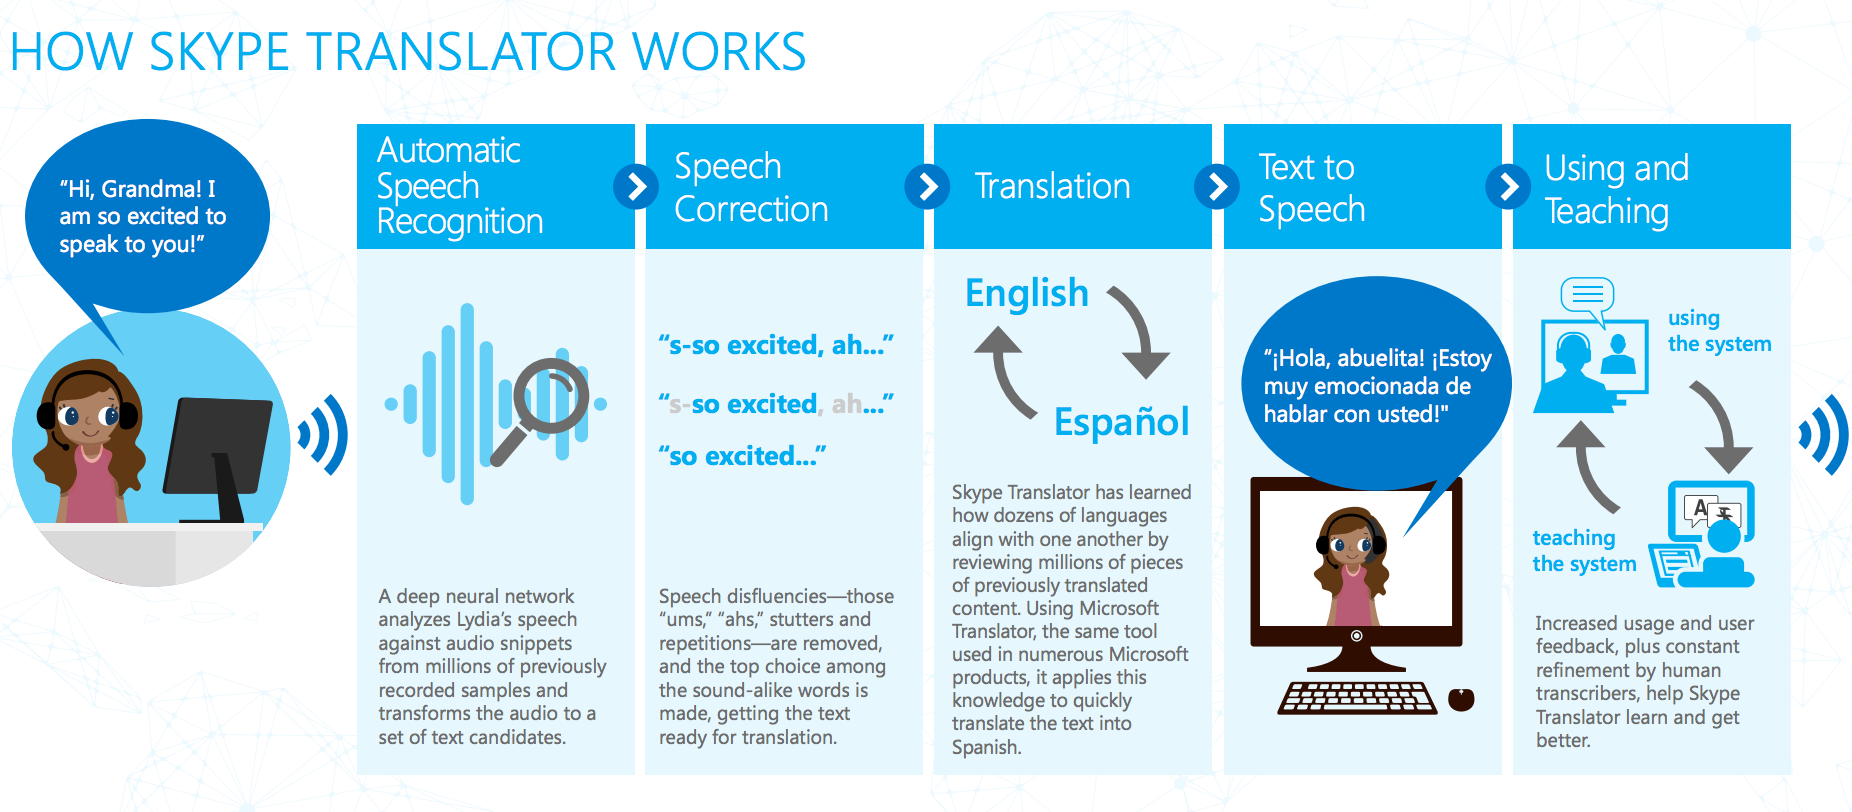 How Skype Translator Works